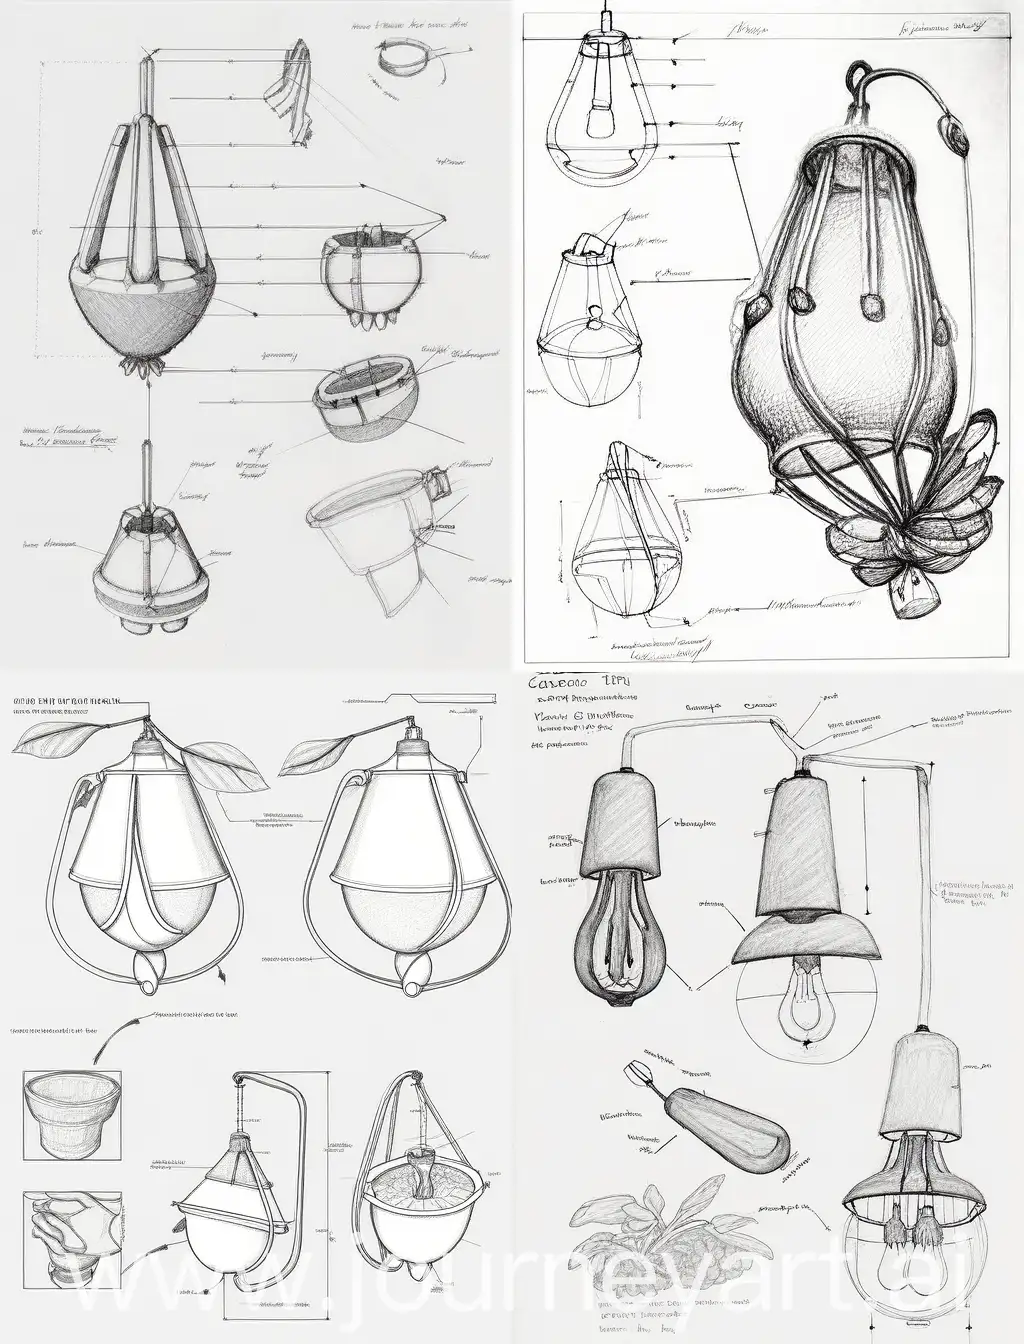 HandDrawn-AvocadoShaped-Tumbler-Lighting-Design-Sketch